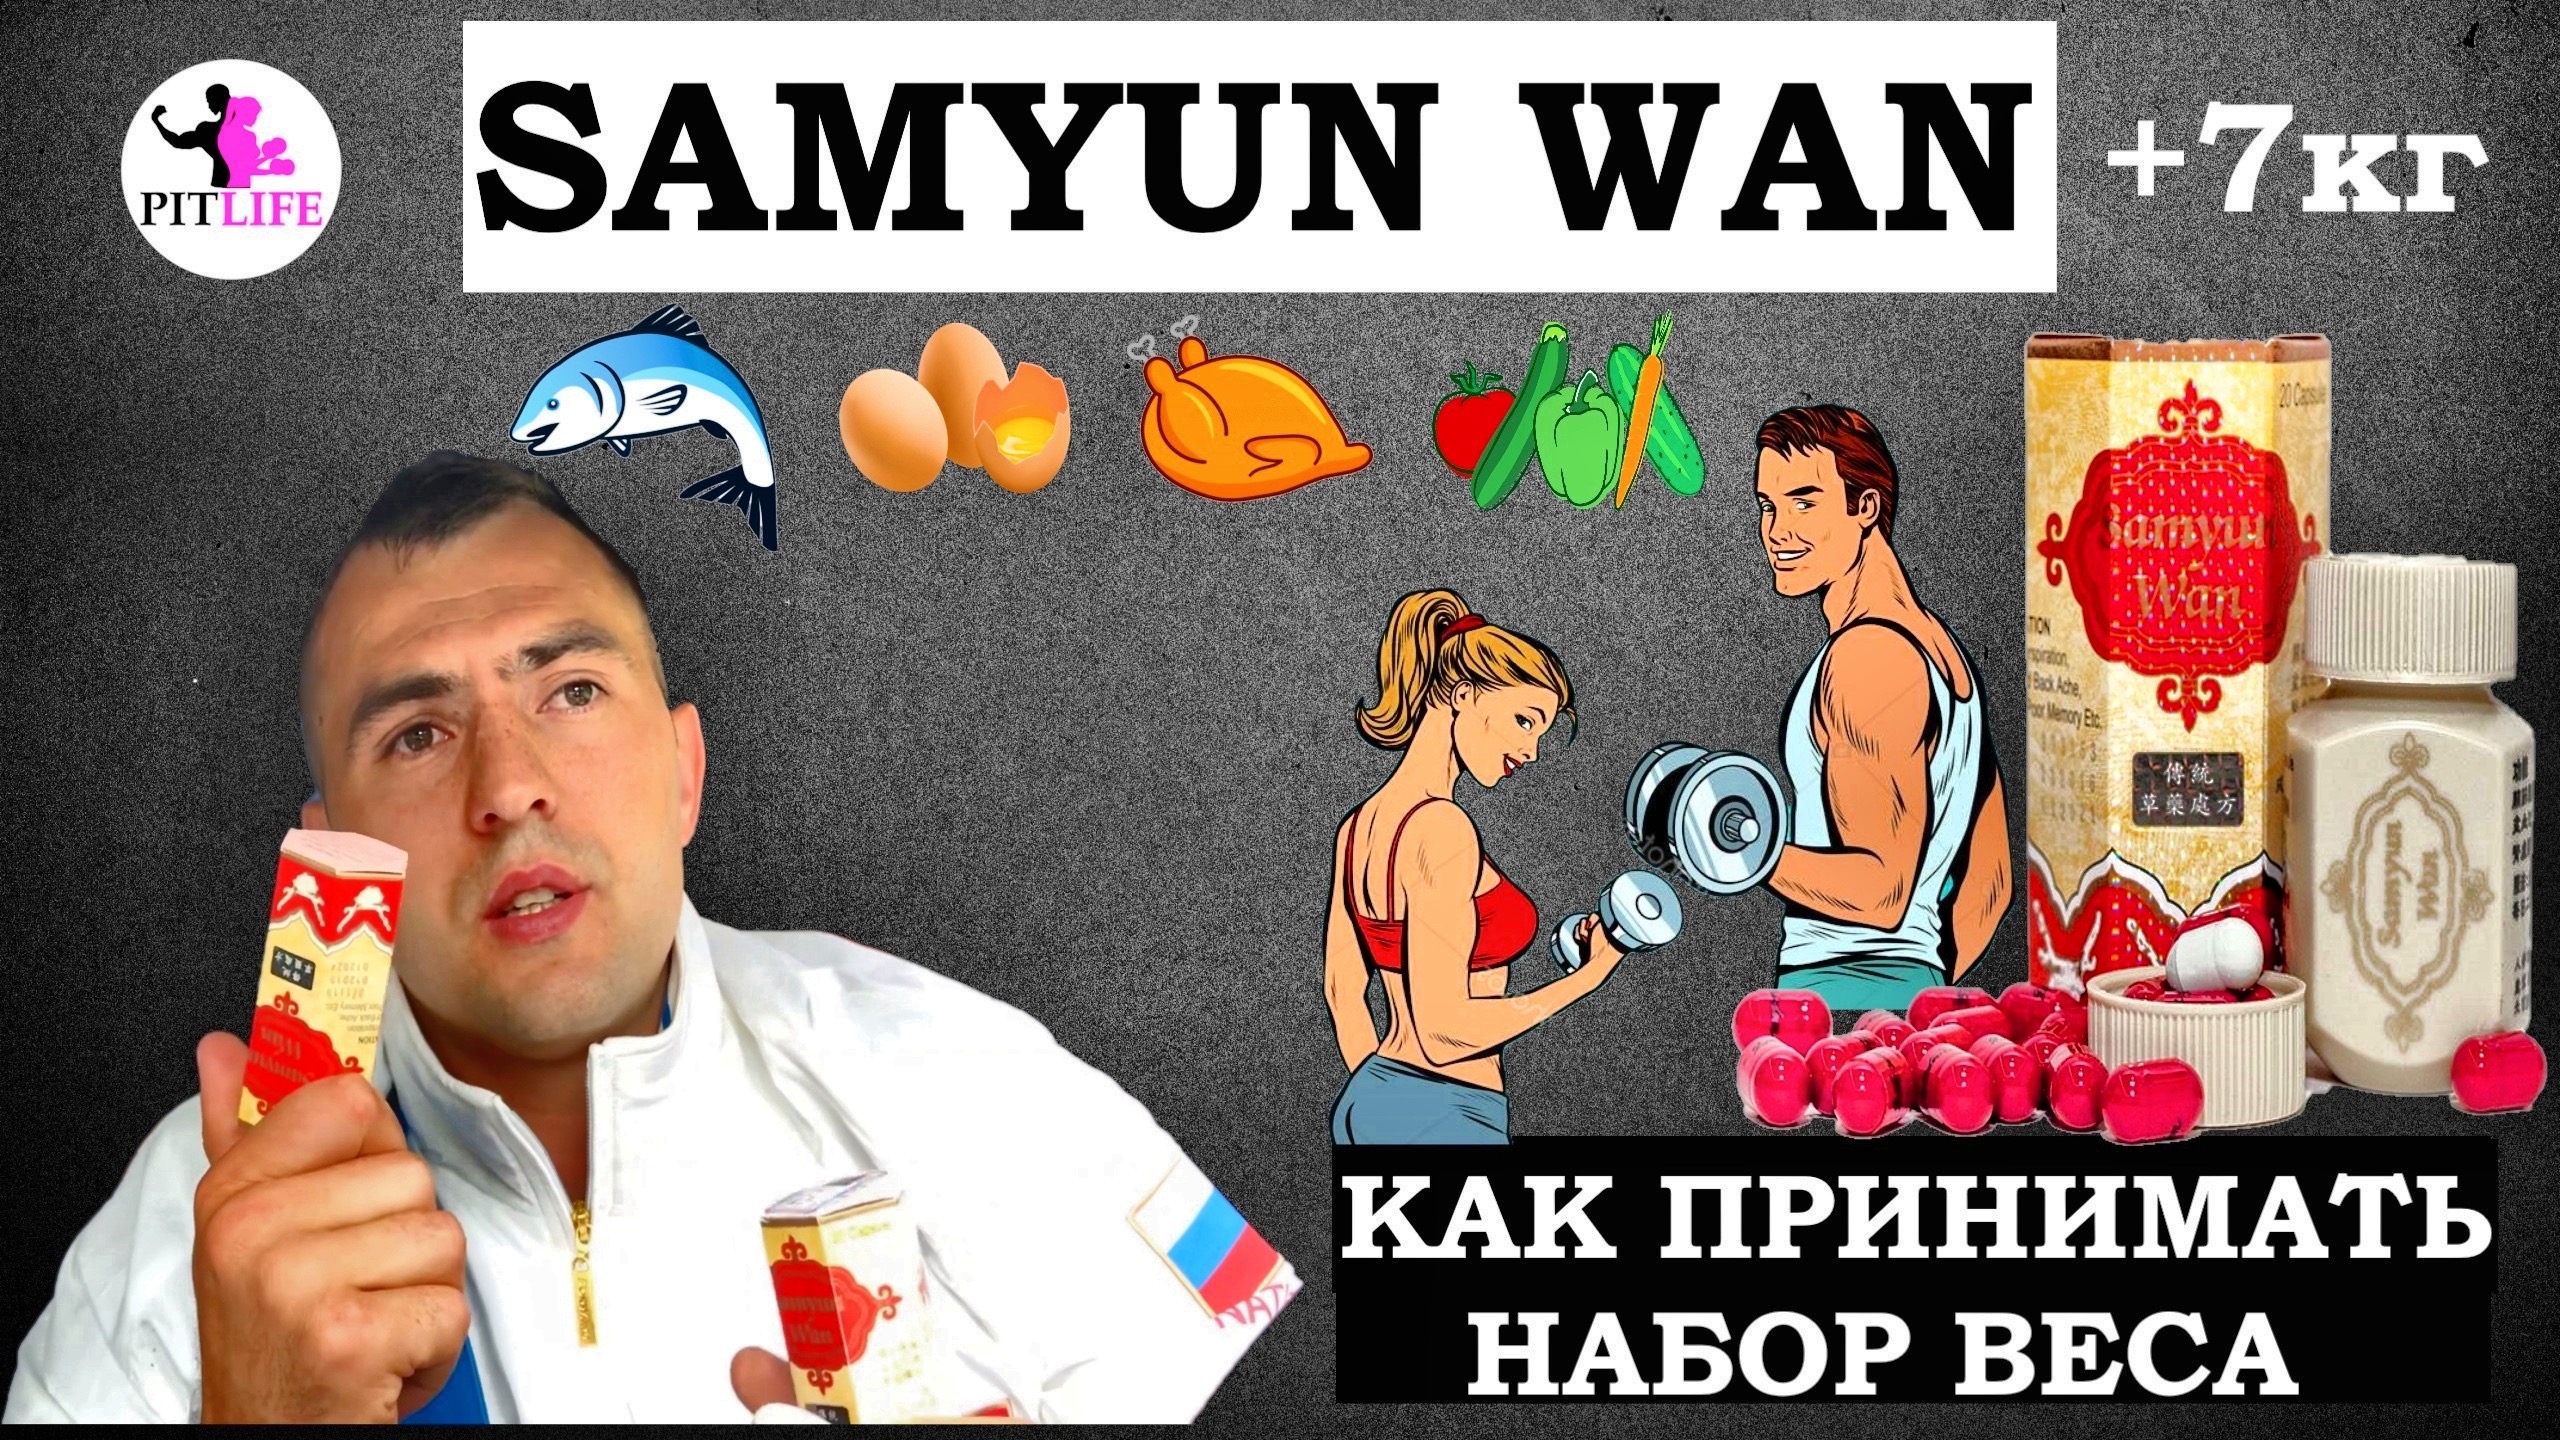 Самюн Ван - Samyun Wan 20 капсул для набора веса, самые популярные капсулы